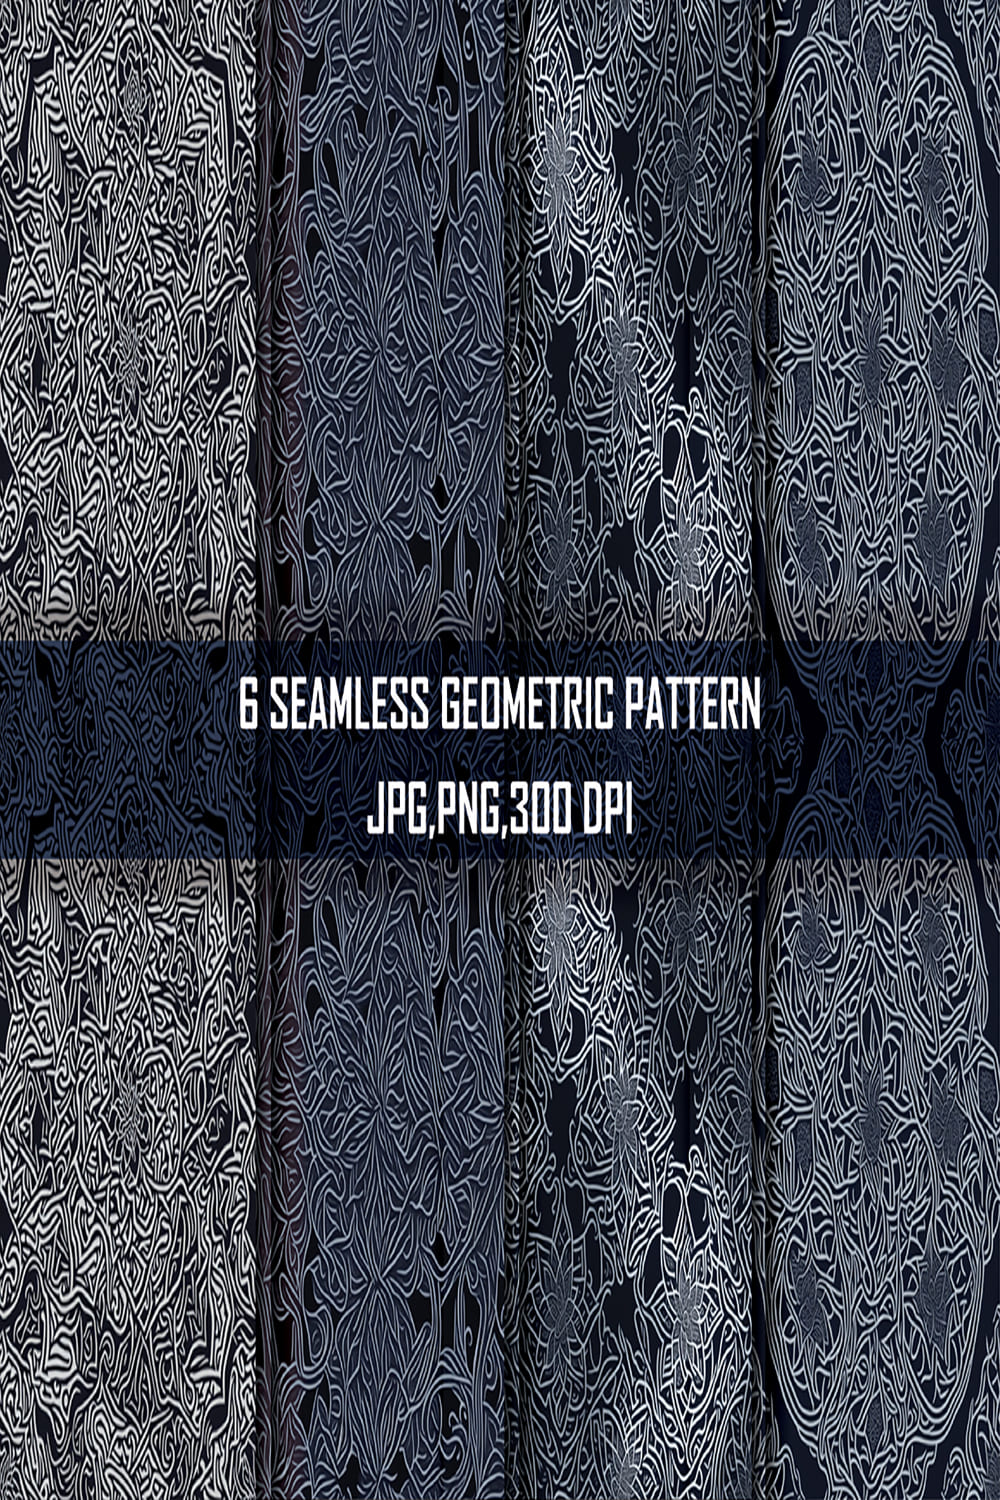 Geometric seamless pattrn pinterest preview image.